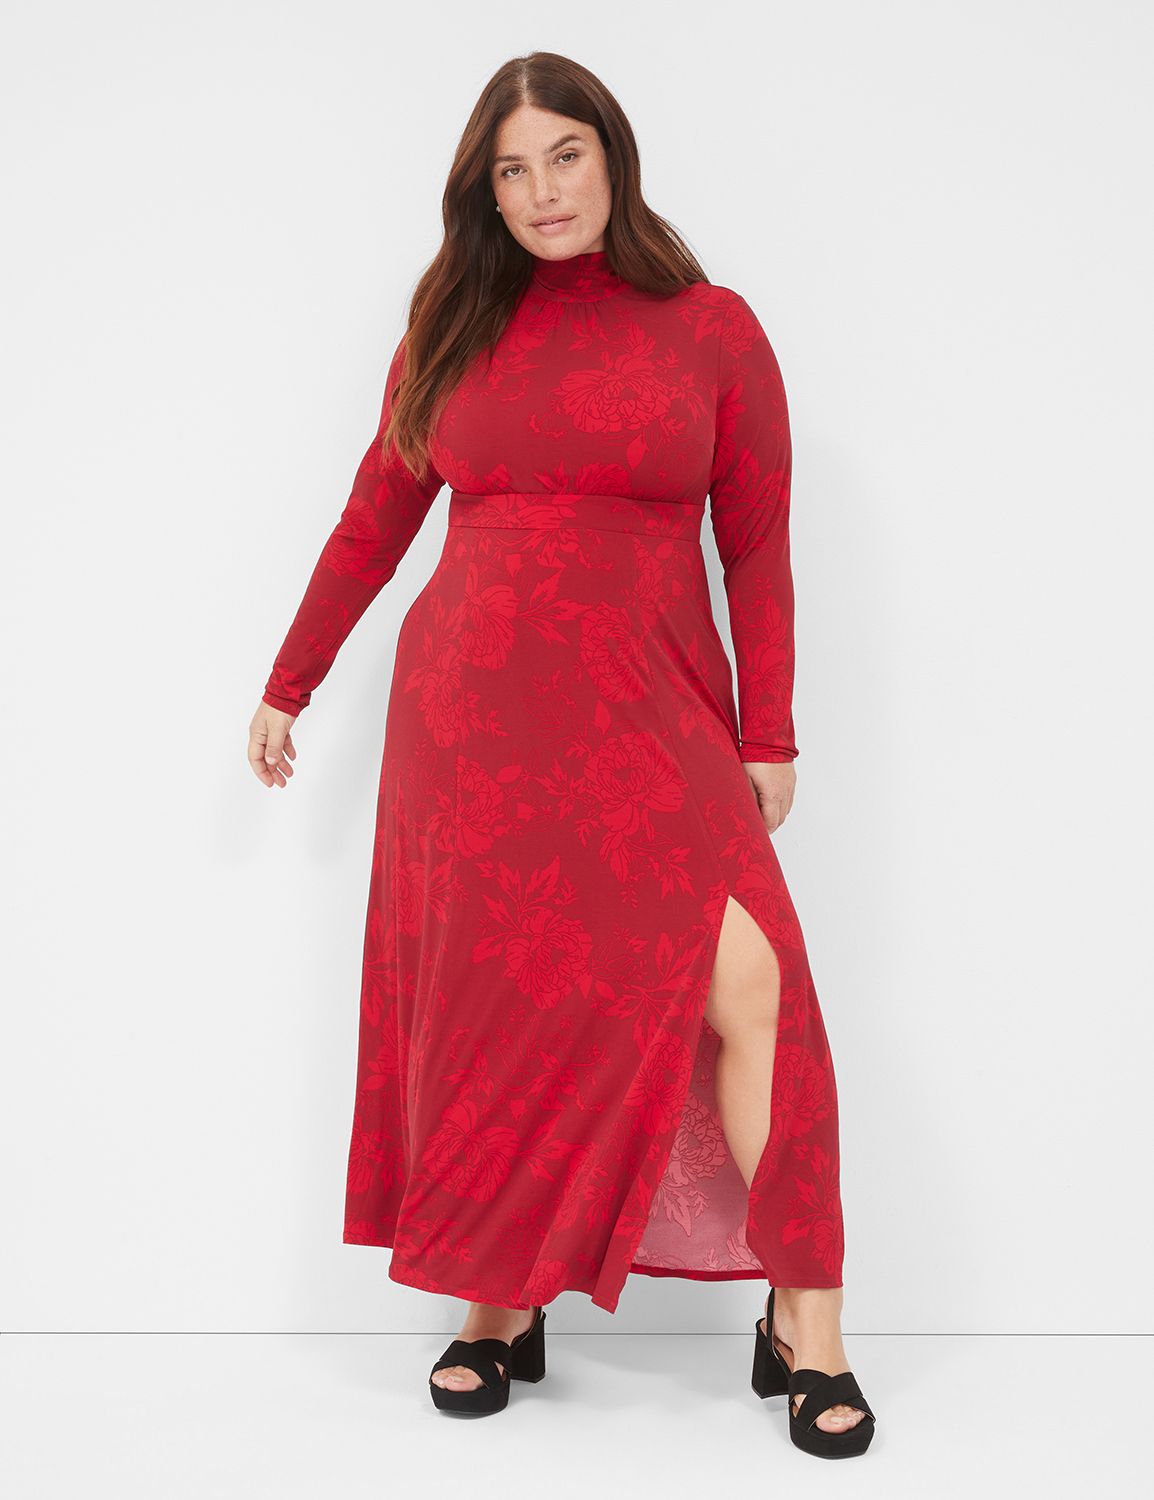 Torrid Beautiful Dusty Red Collared Jersey Shirt Dress Plus Size 2X, 18/20